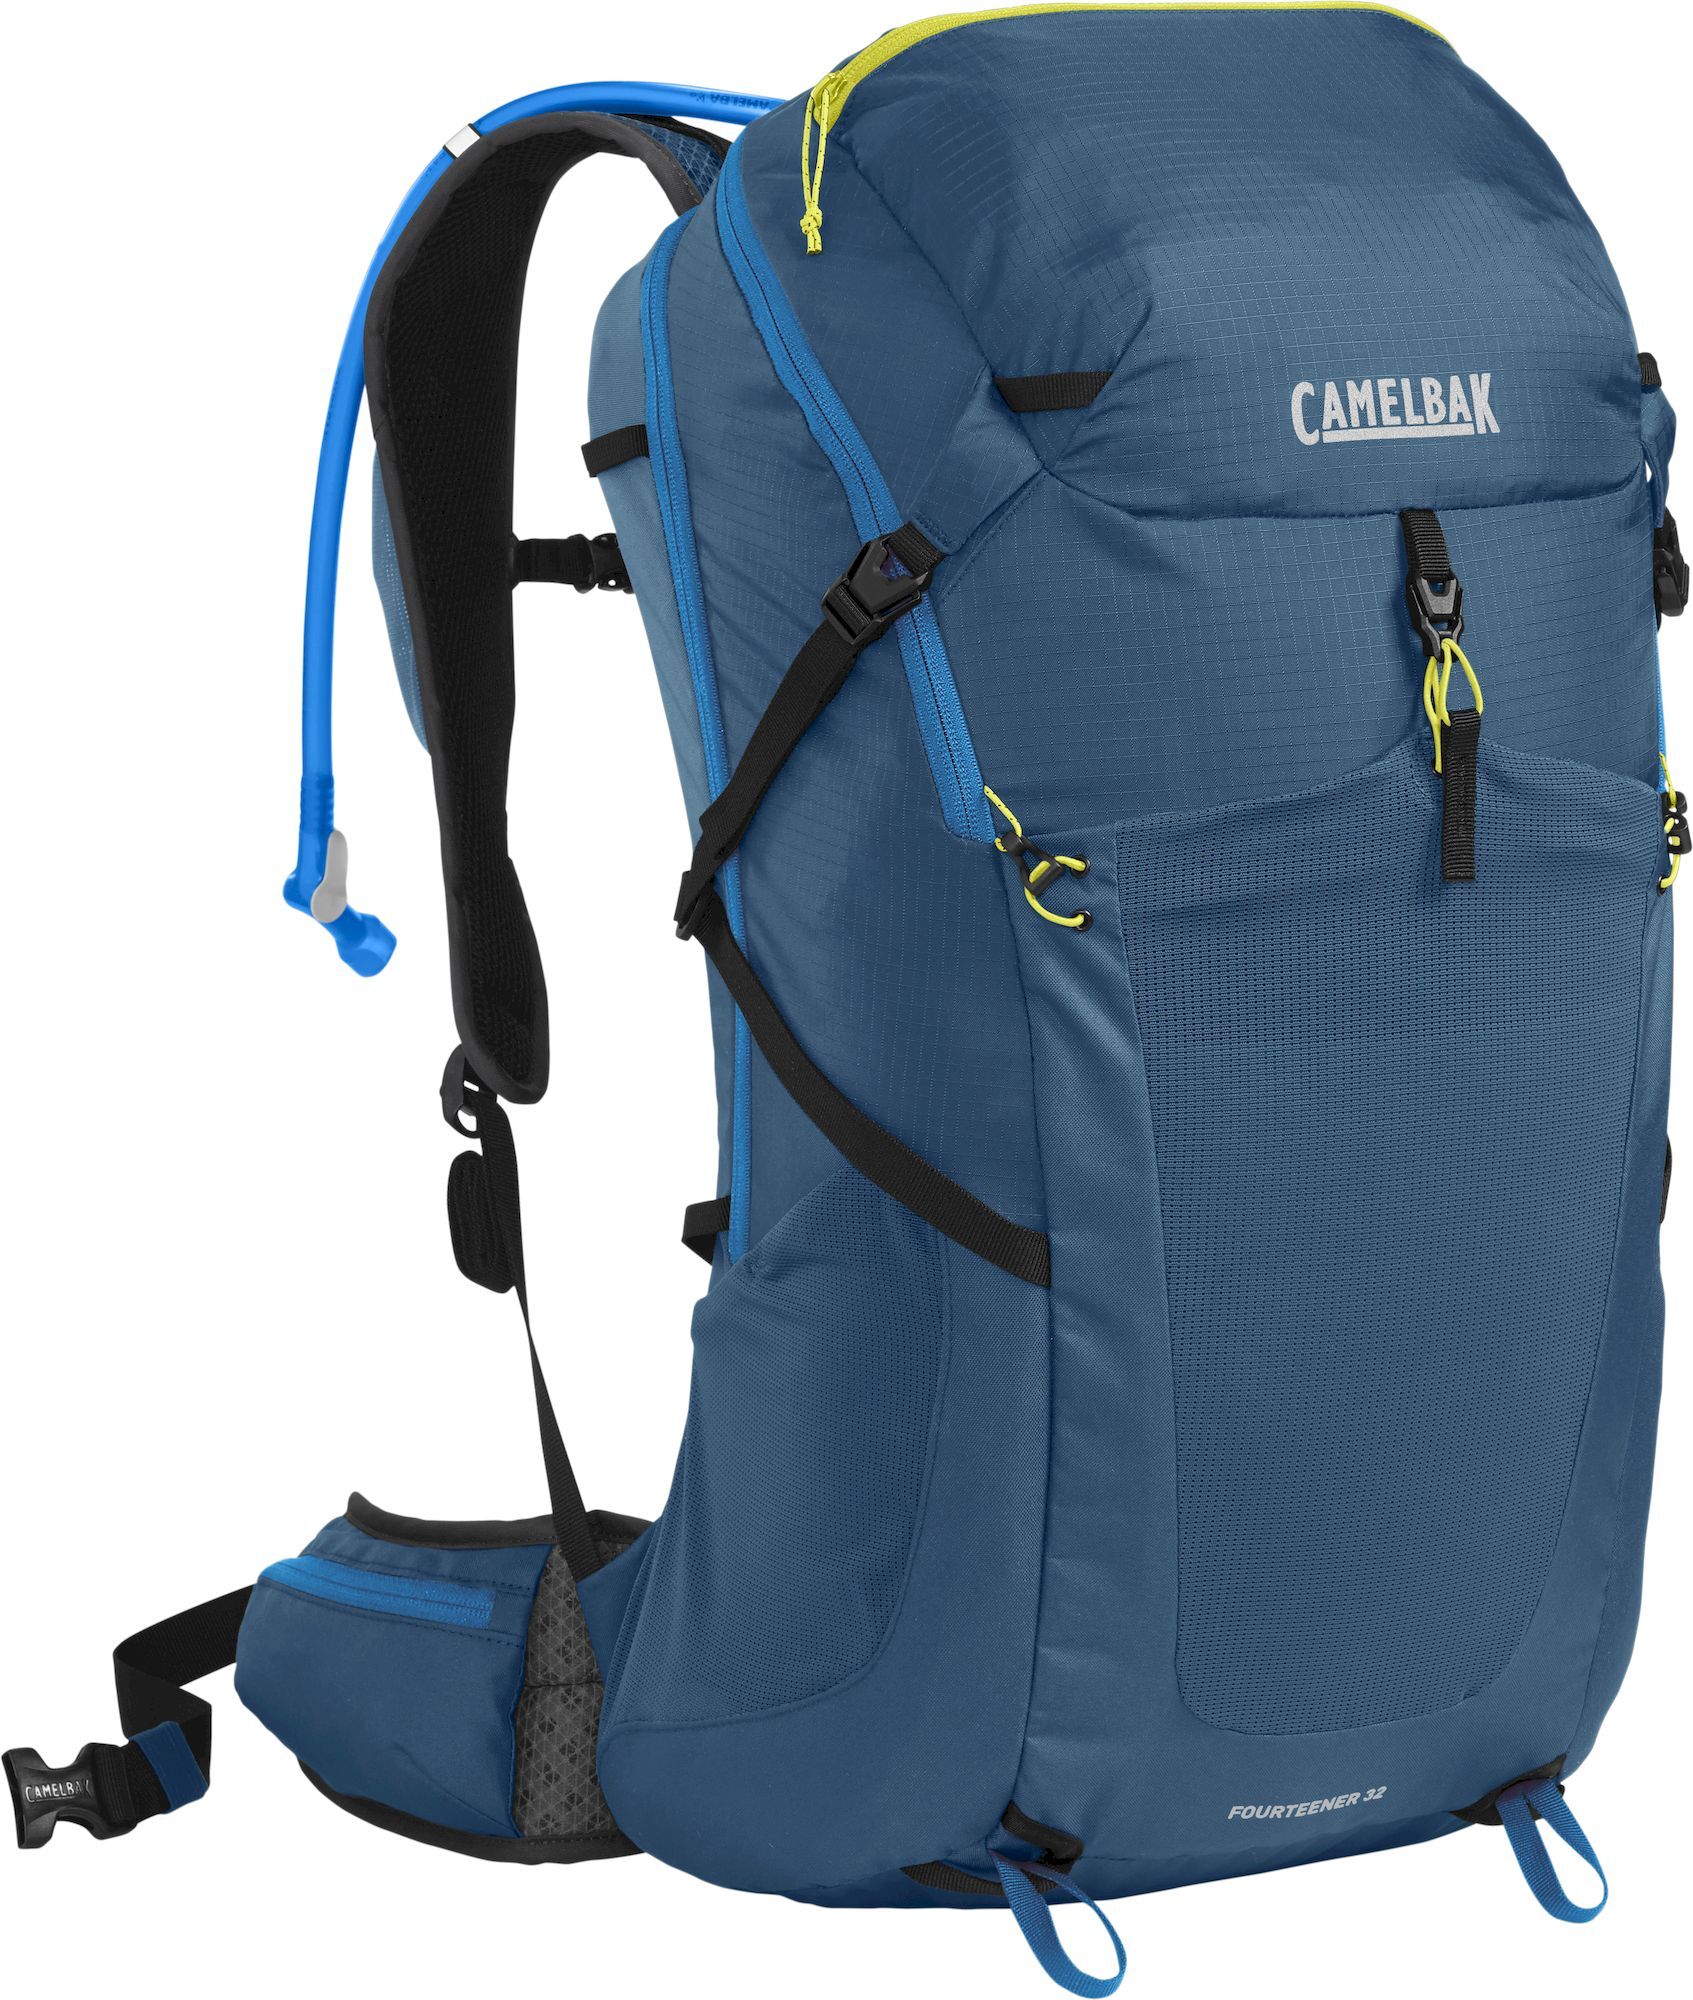 Camelbak Fourteener 32 - Walking backpack | Hardloop